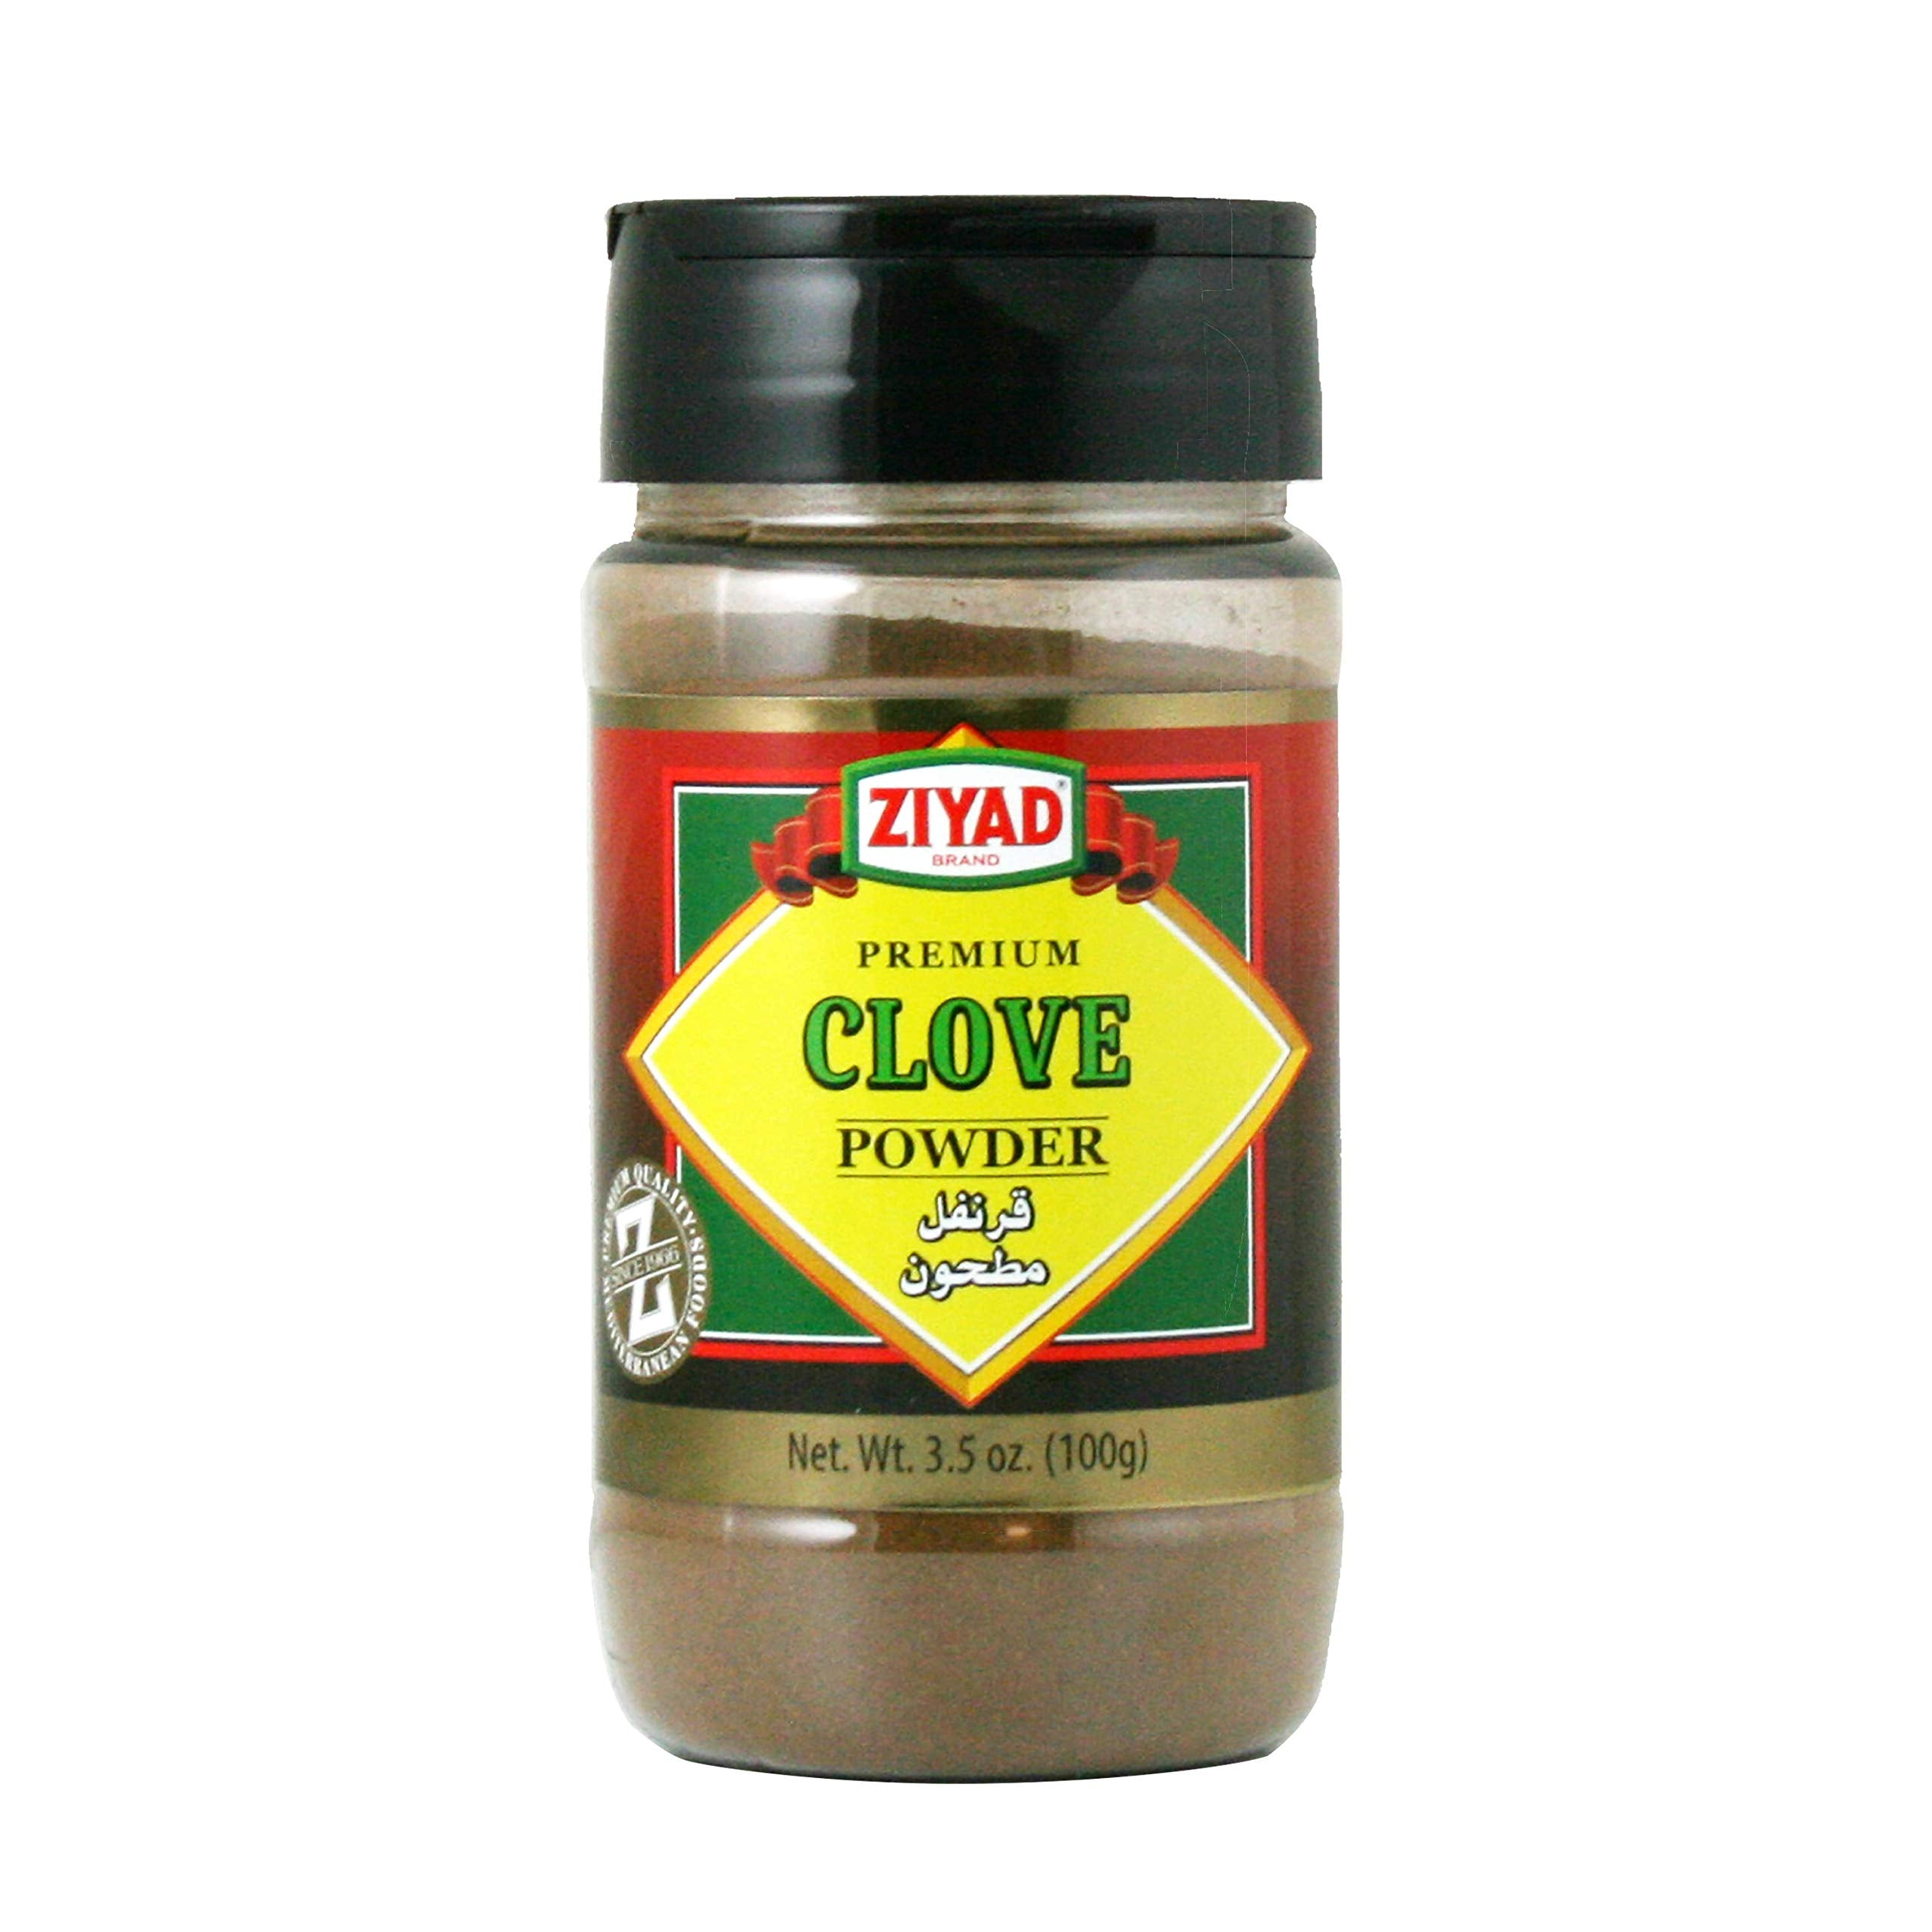 ziyad-clove-powder